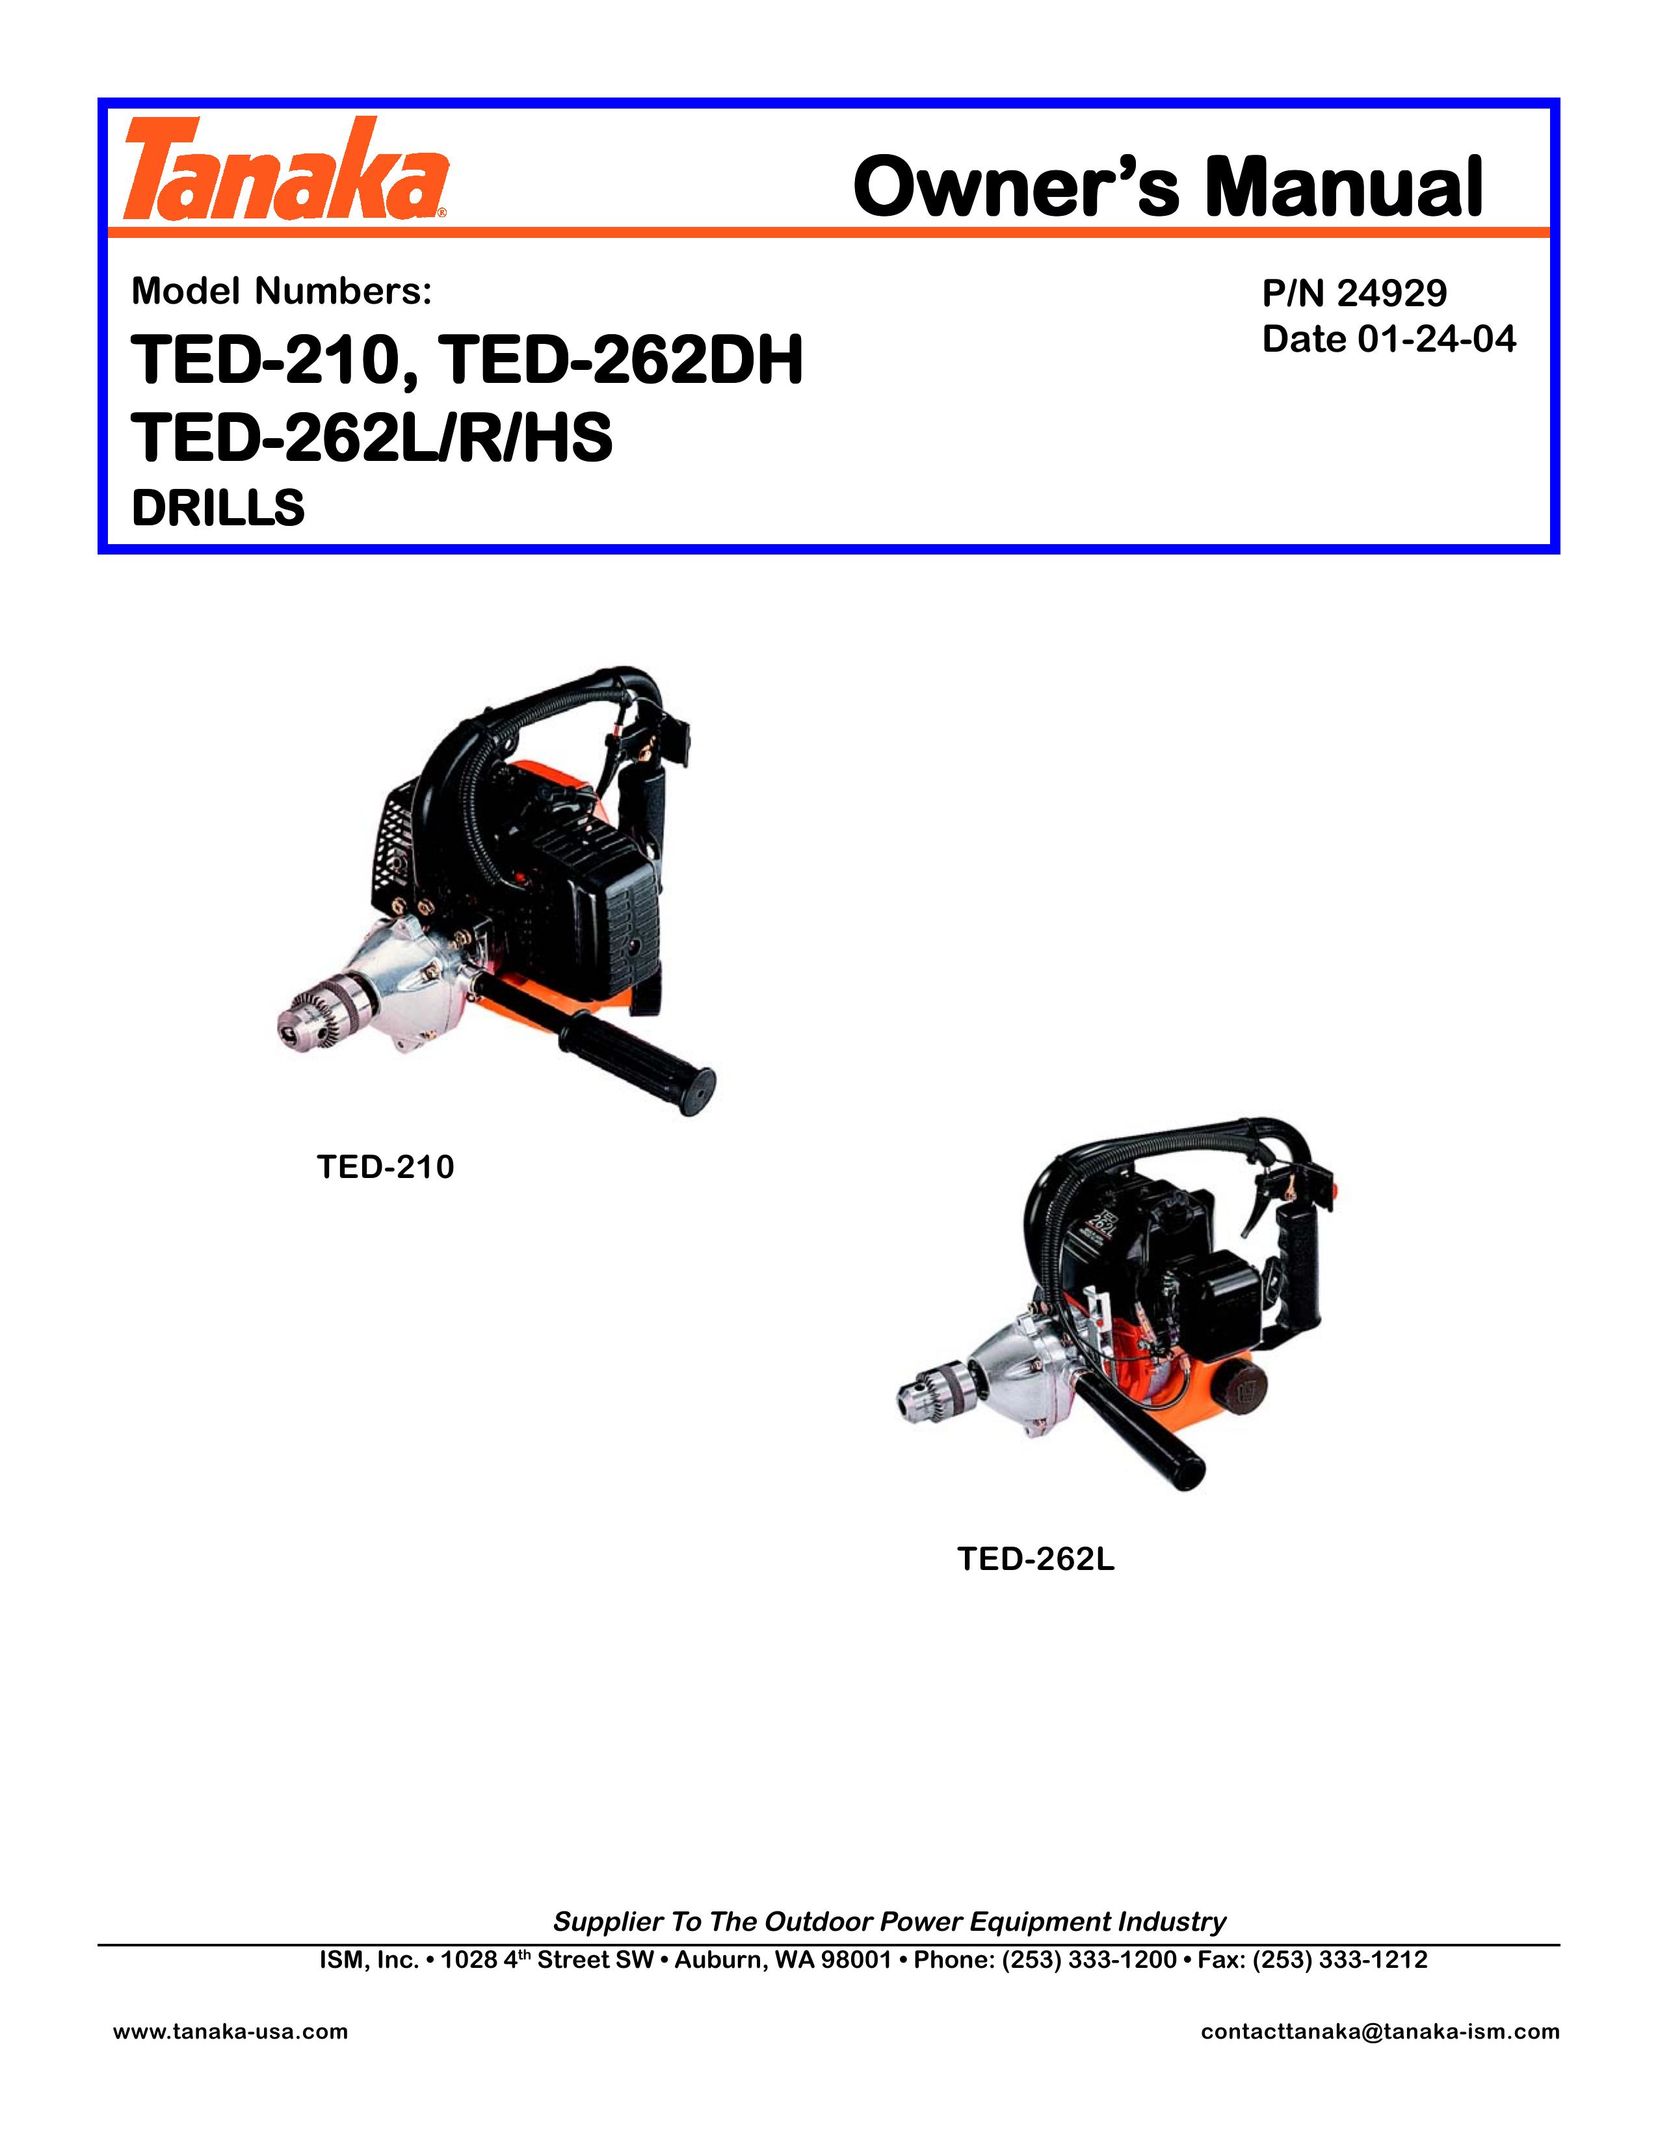 Tanaka TED-262DH Drill User Manual